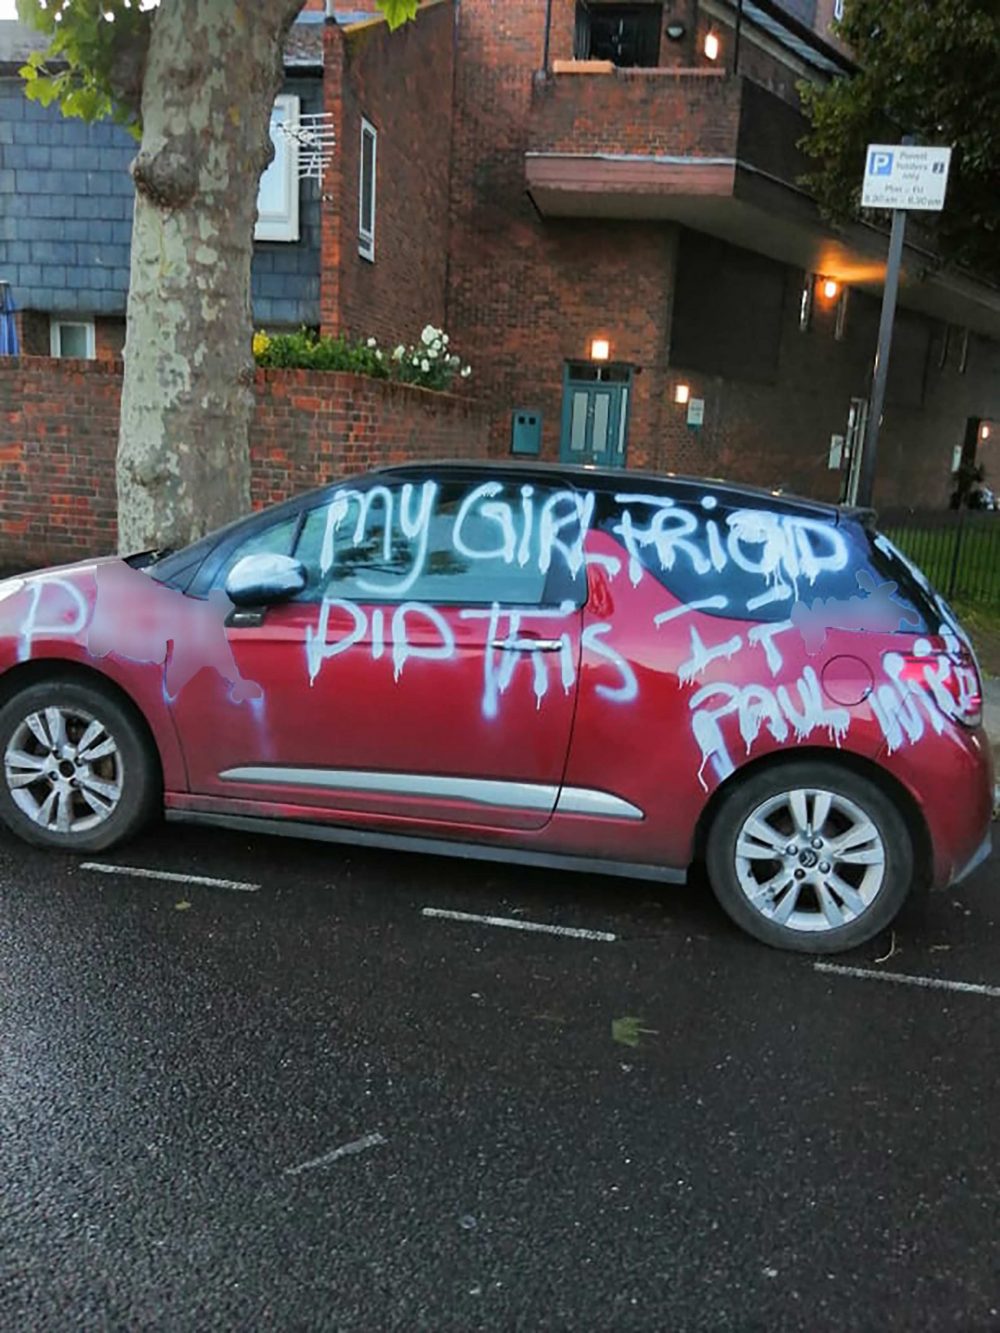 Red Citroen covered in white spray paint- London Crime News